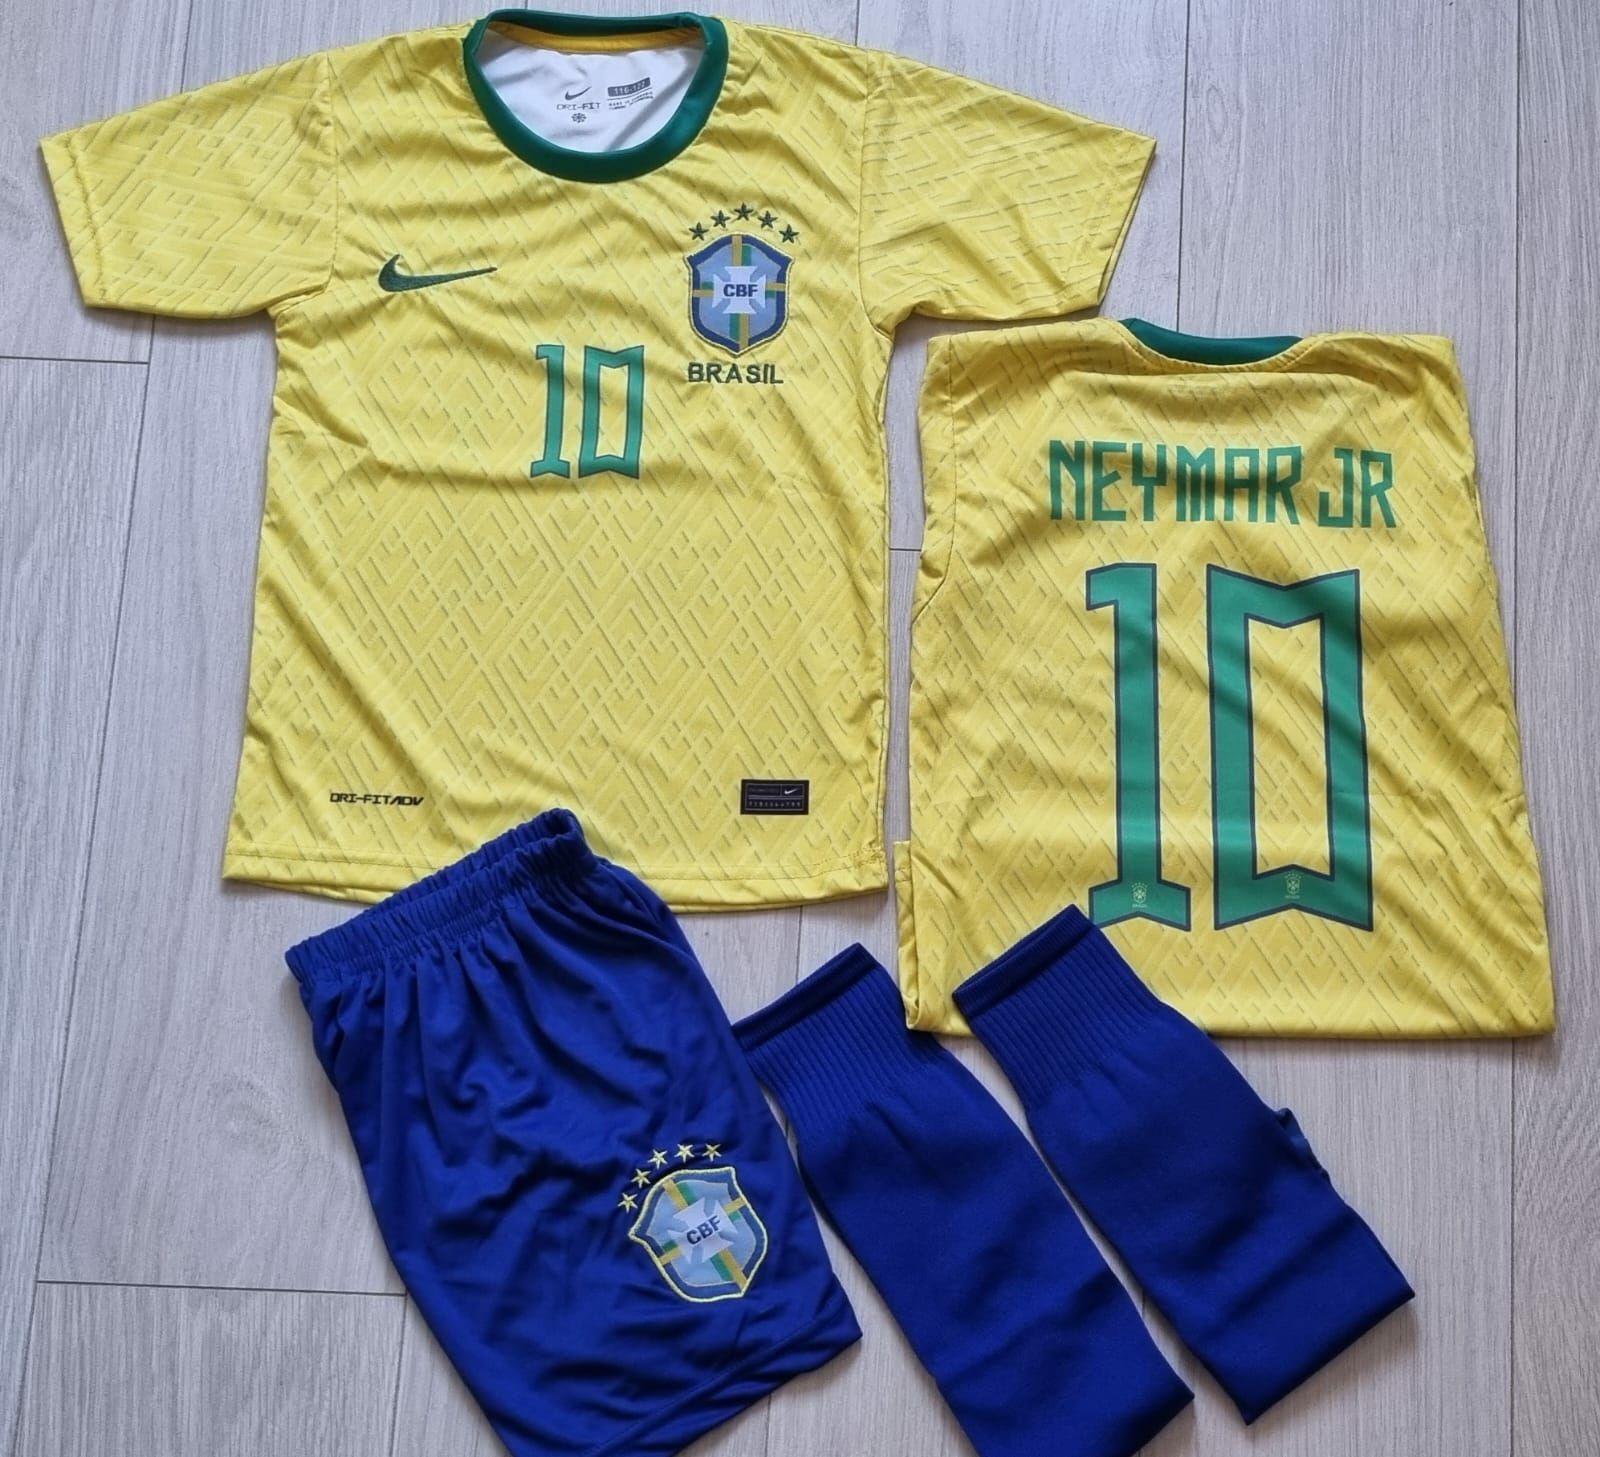 Echipamente fotbal copii 4/14 ani.Neymar -Brazilia